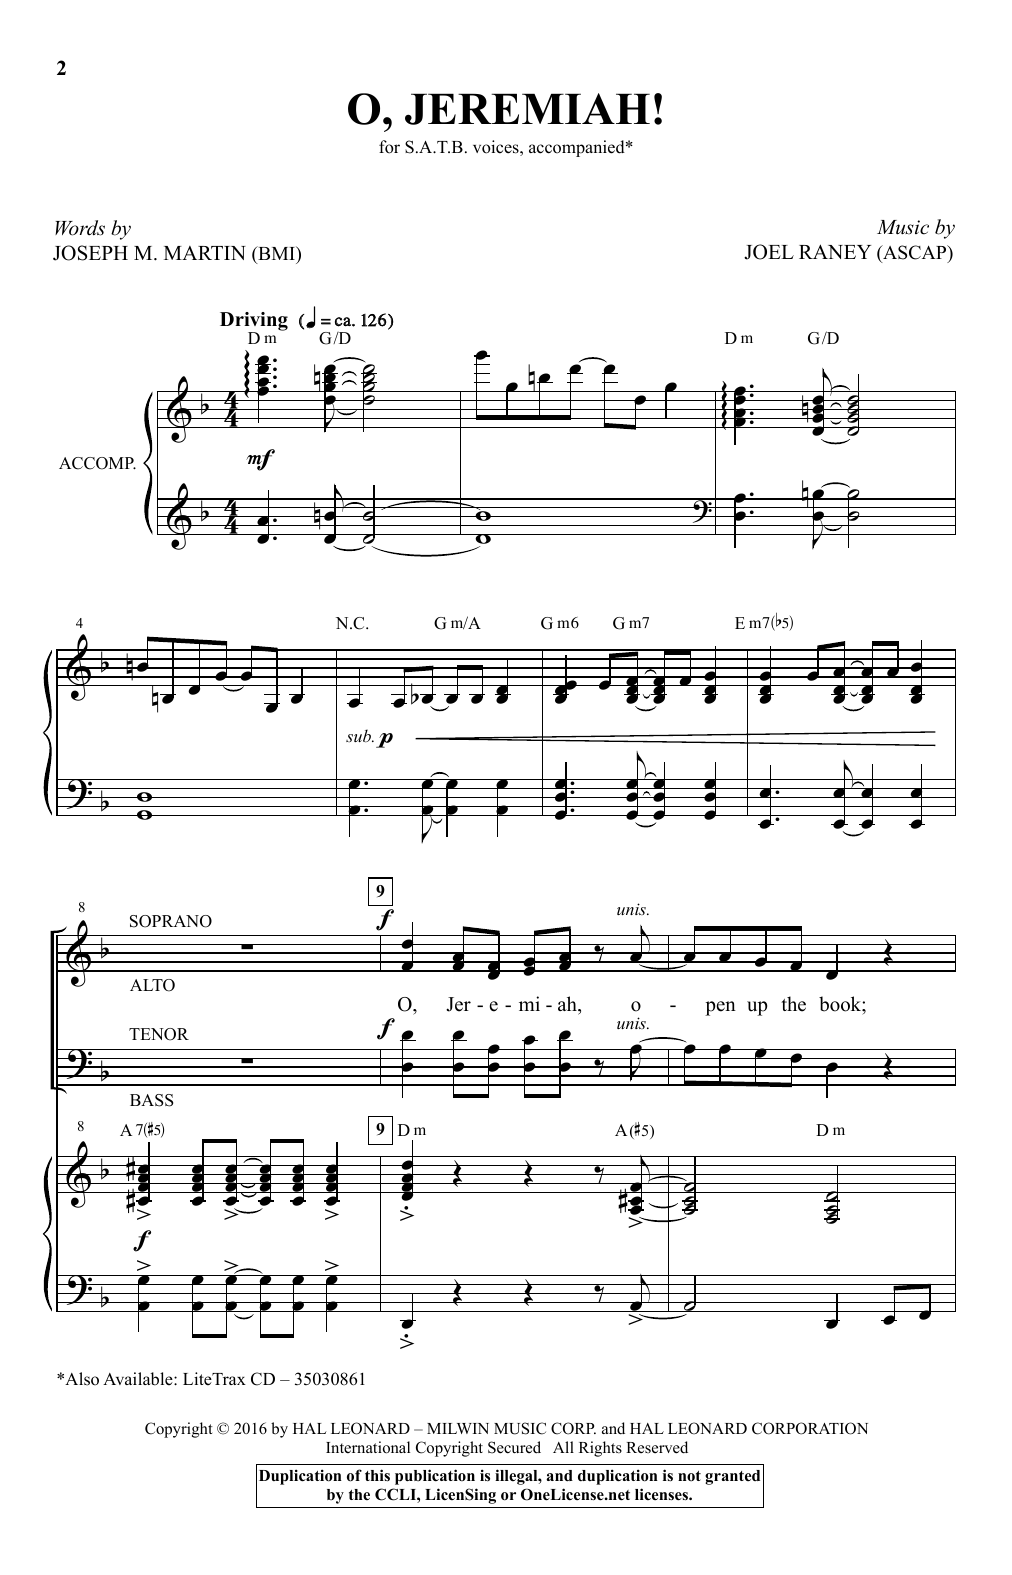 Joel Raney O, Jeremiah! Sheet Music Notes & Chords for SATB - Download or Print PDF